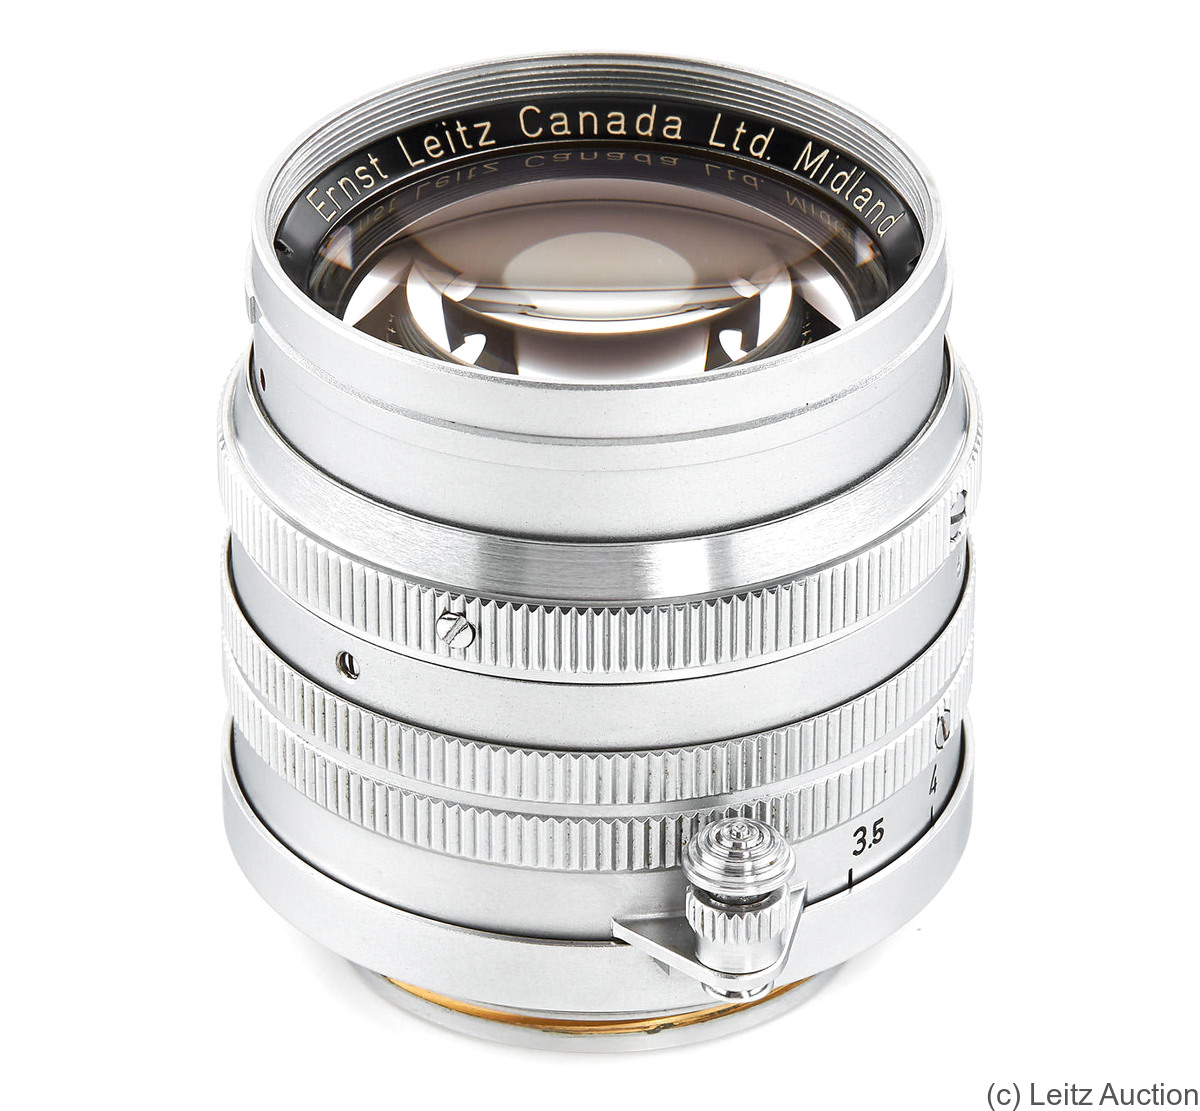 Leitz: 50mm (5cm) f1.5 Summarit (SM, Midland) camera